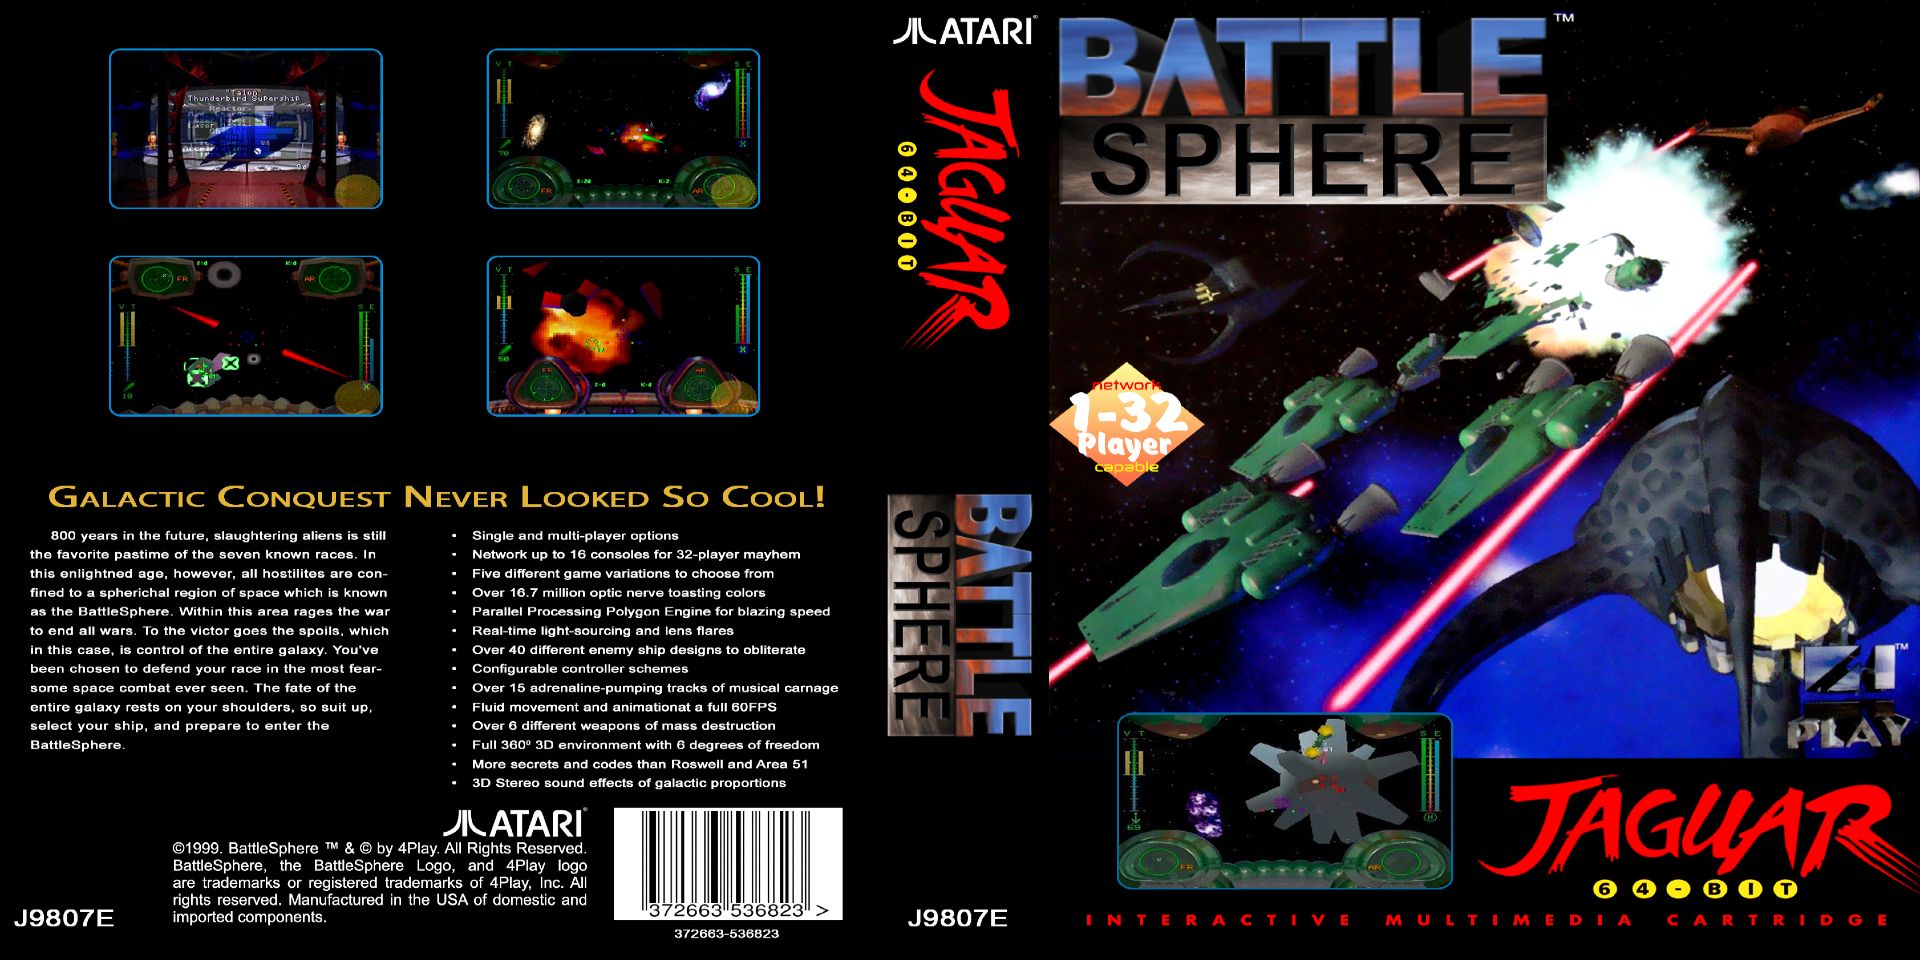 The box art for the rare Atari Jaguar game Battlesphere.